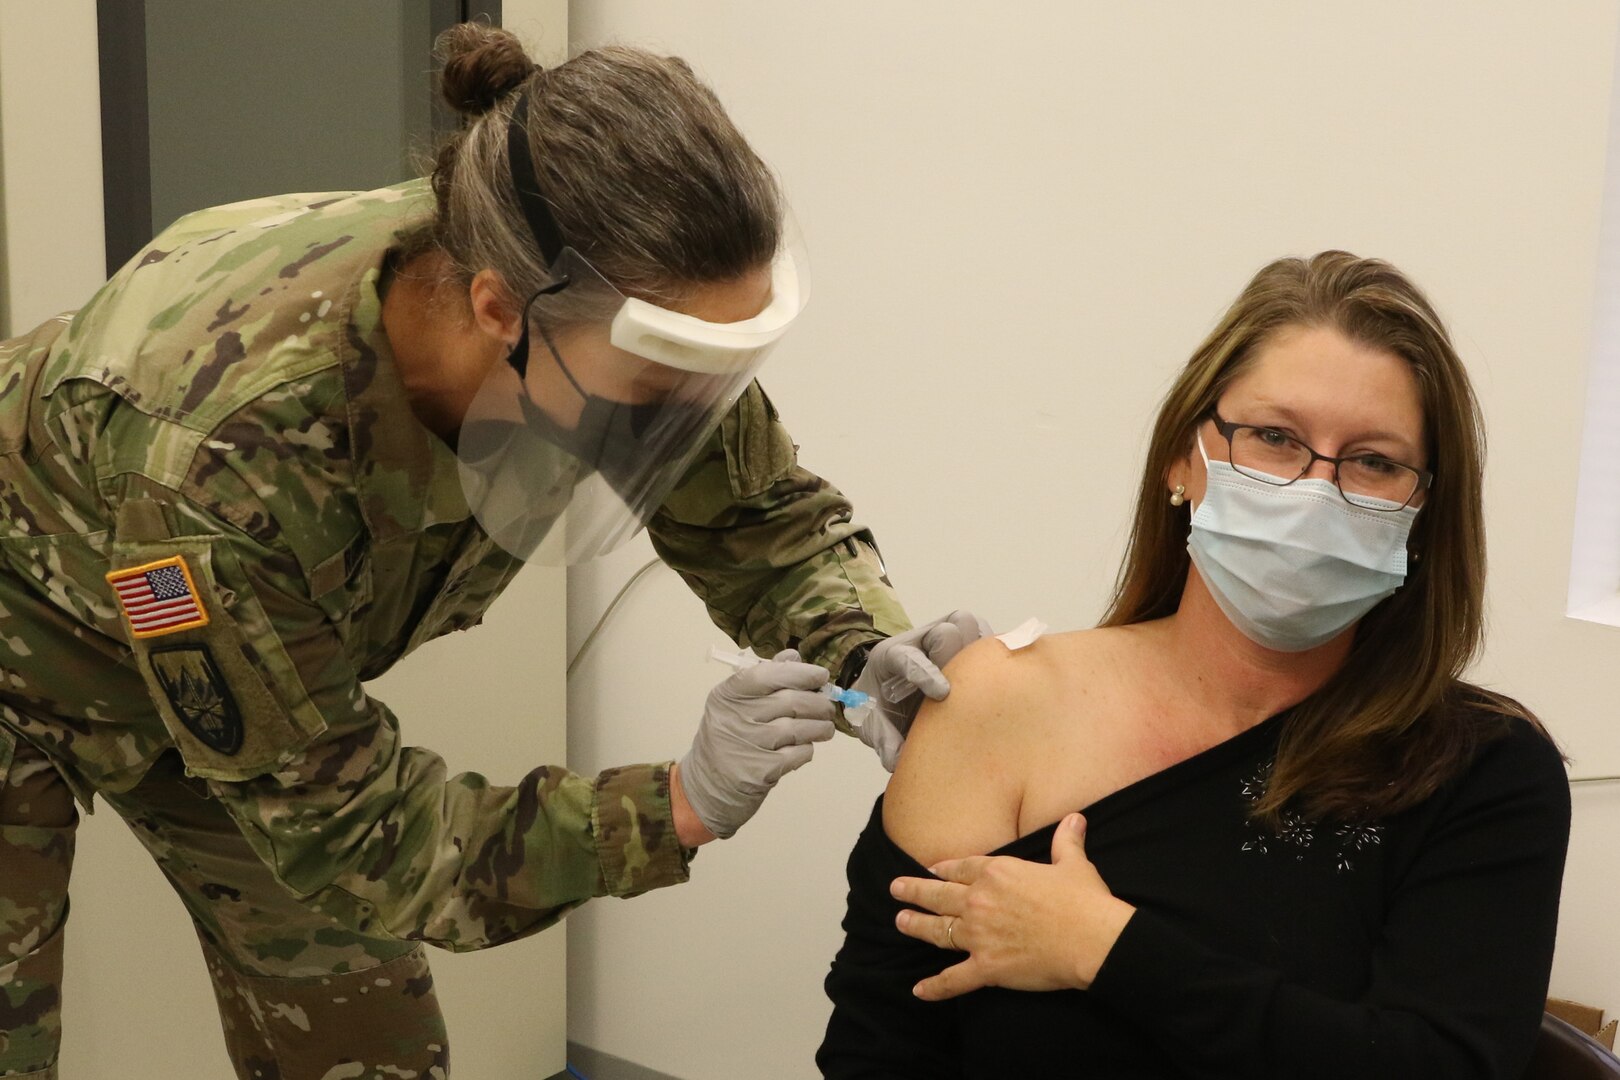 Bobbie Rae receives a COVID-19 vaccination from Col. Brenda Ruhrer Dec. 31, 2020, at Fort Pickett, Virginia.